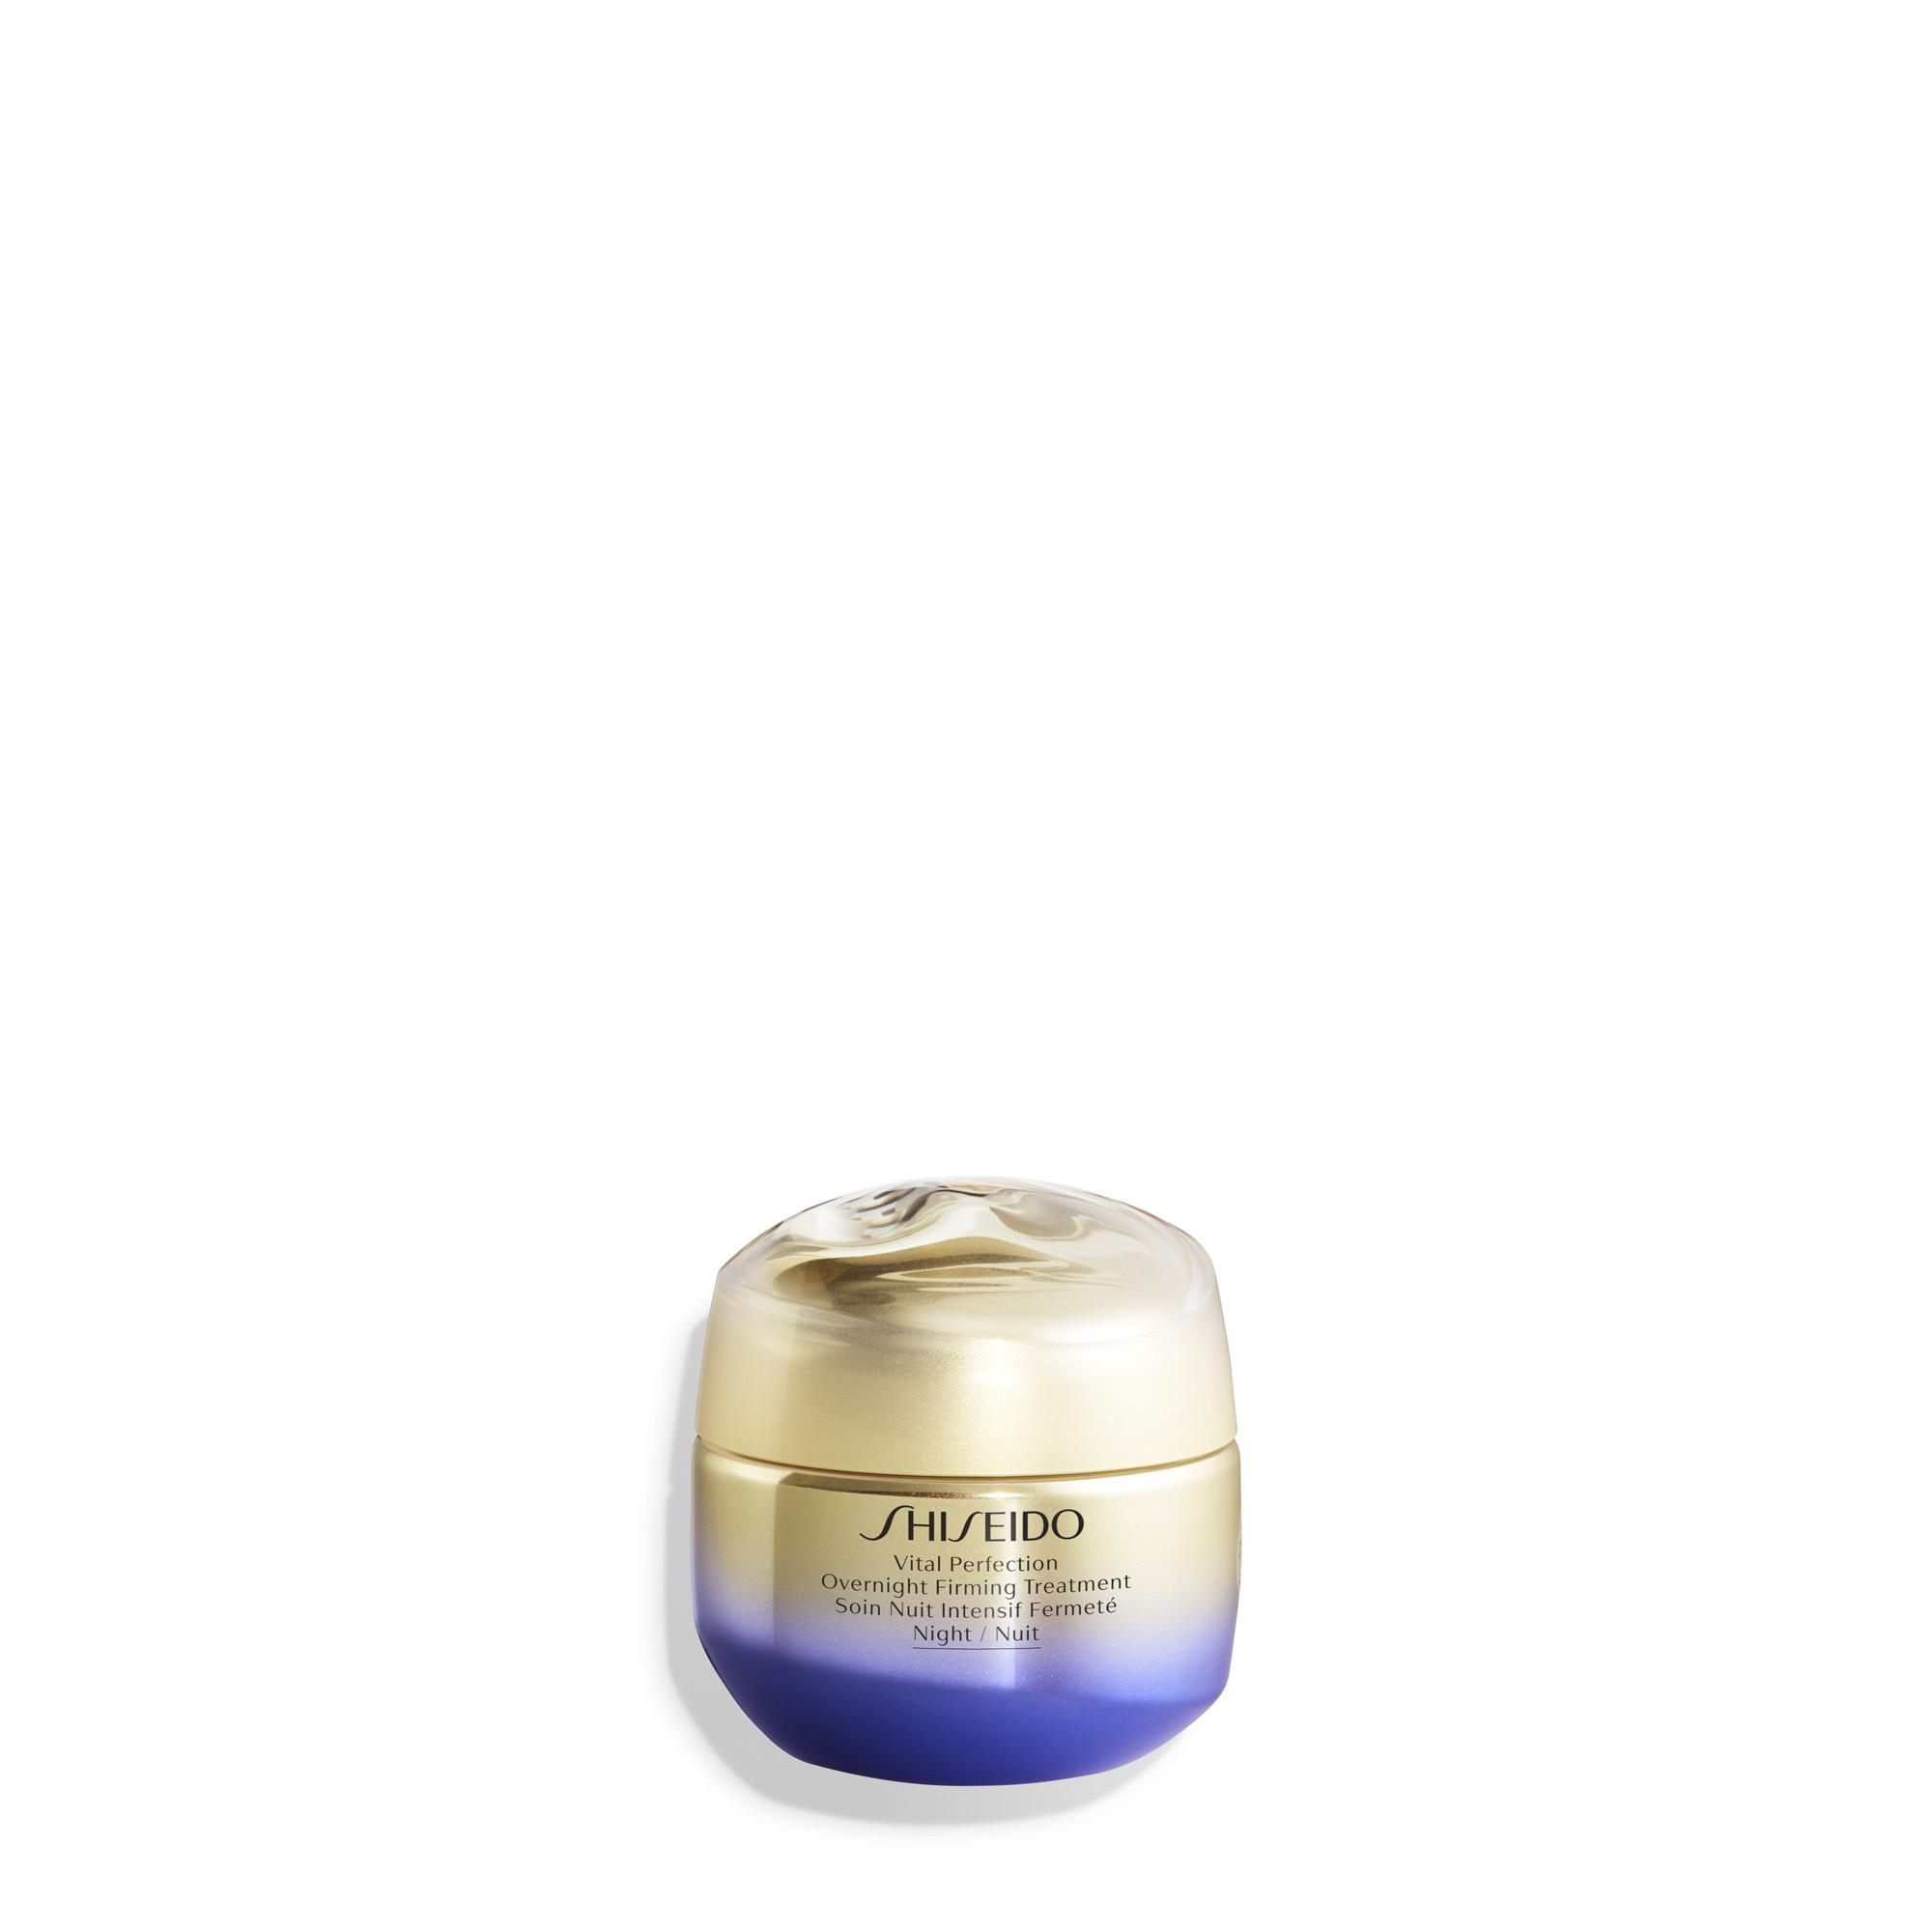 Shiseido Vital Perfection Overnight Firming Treatment  50 ml